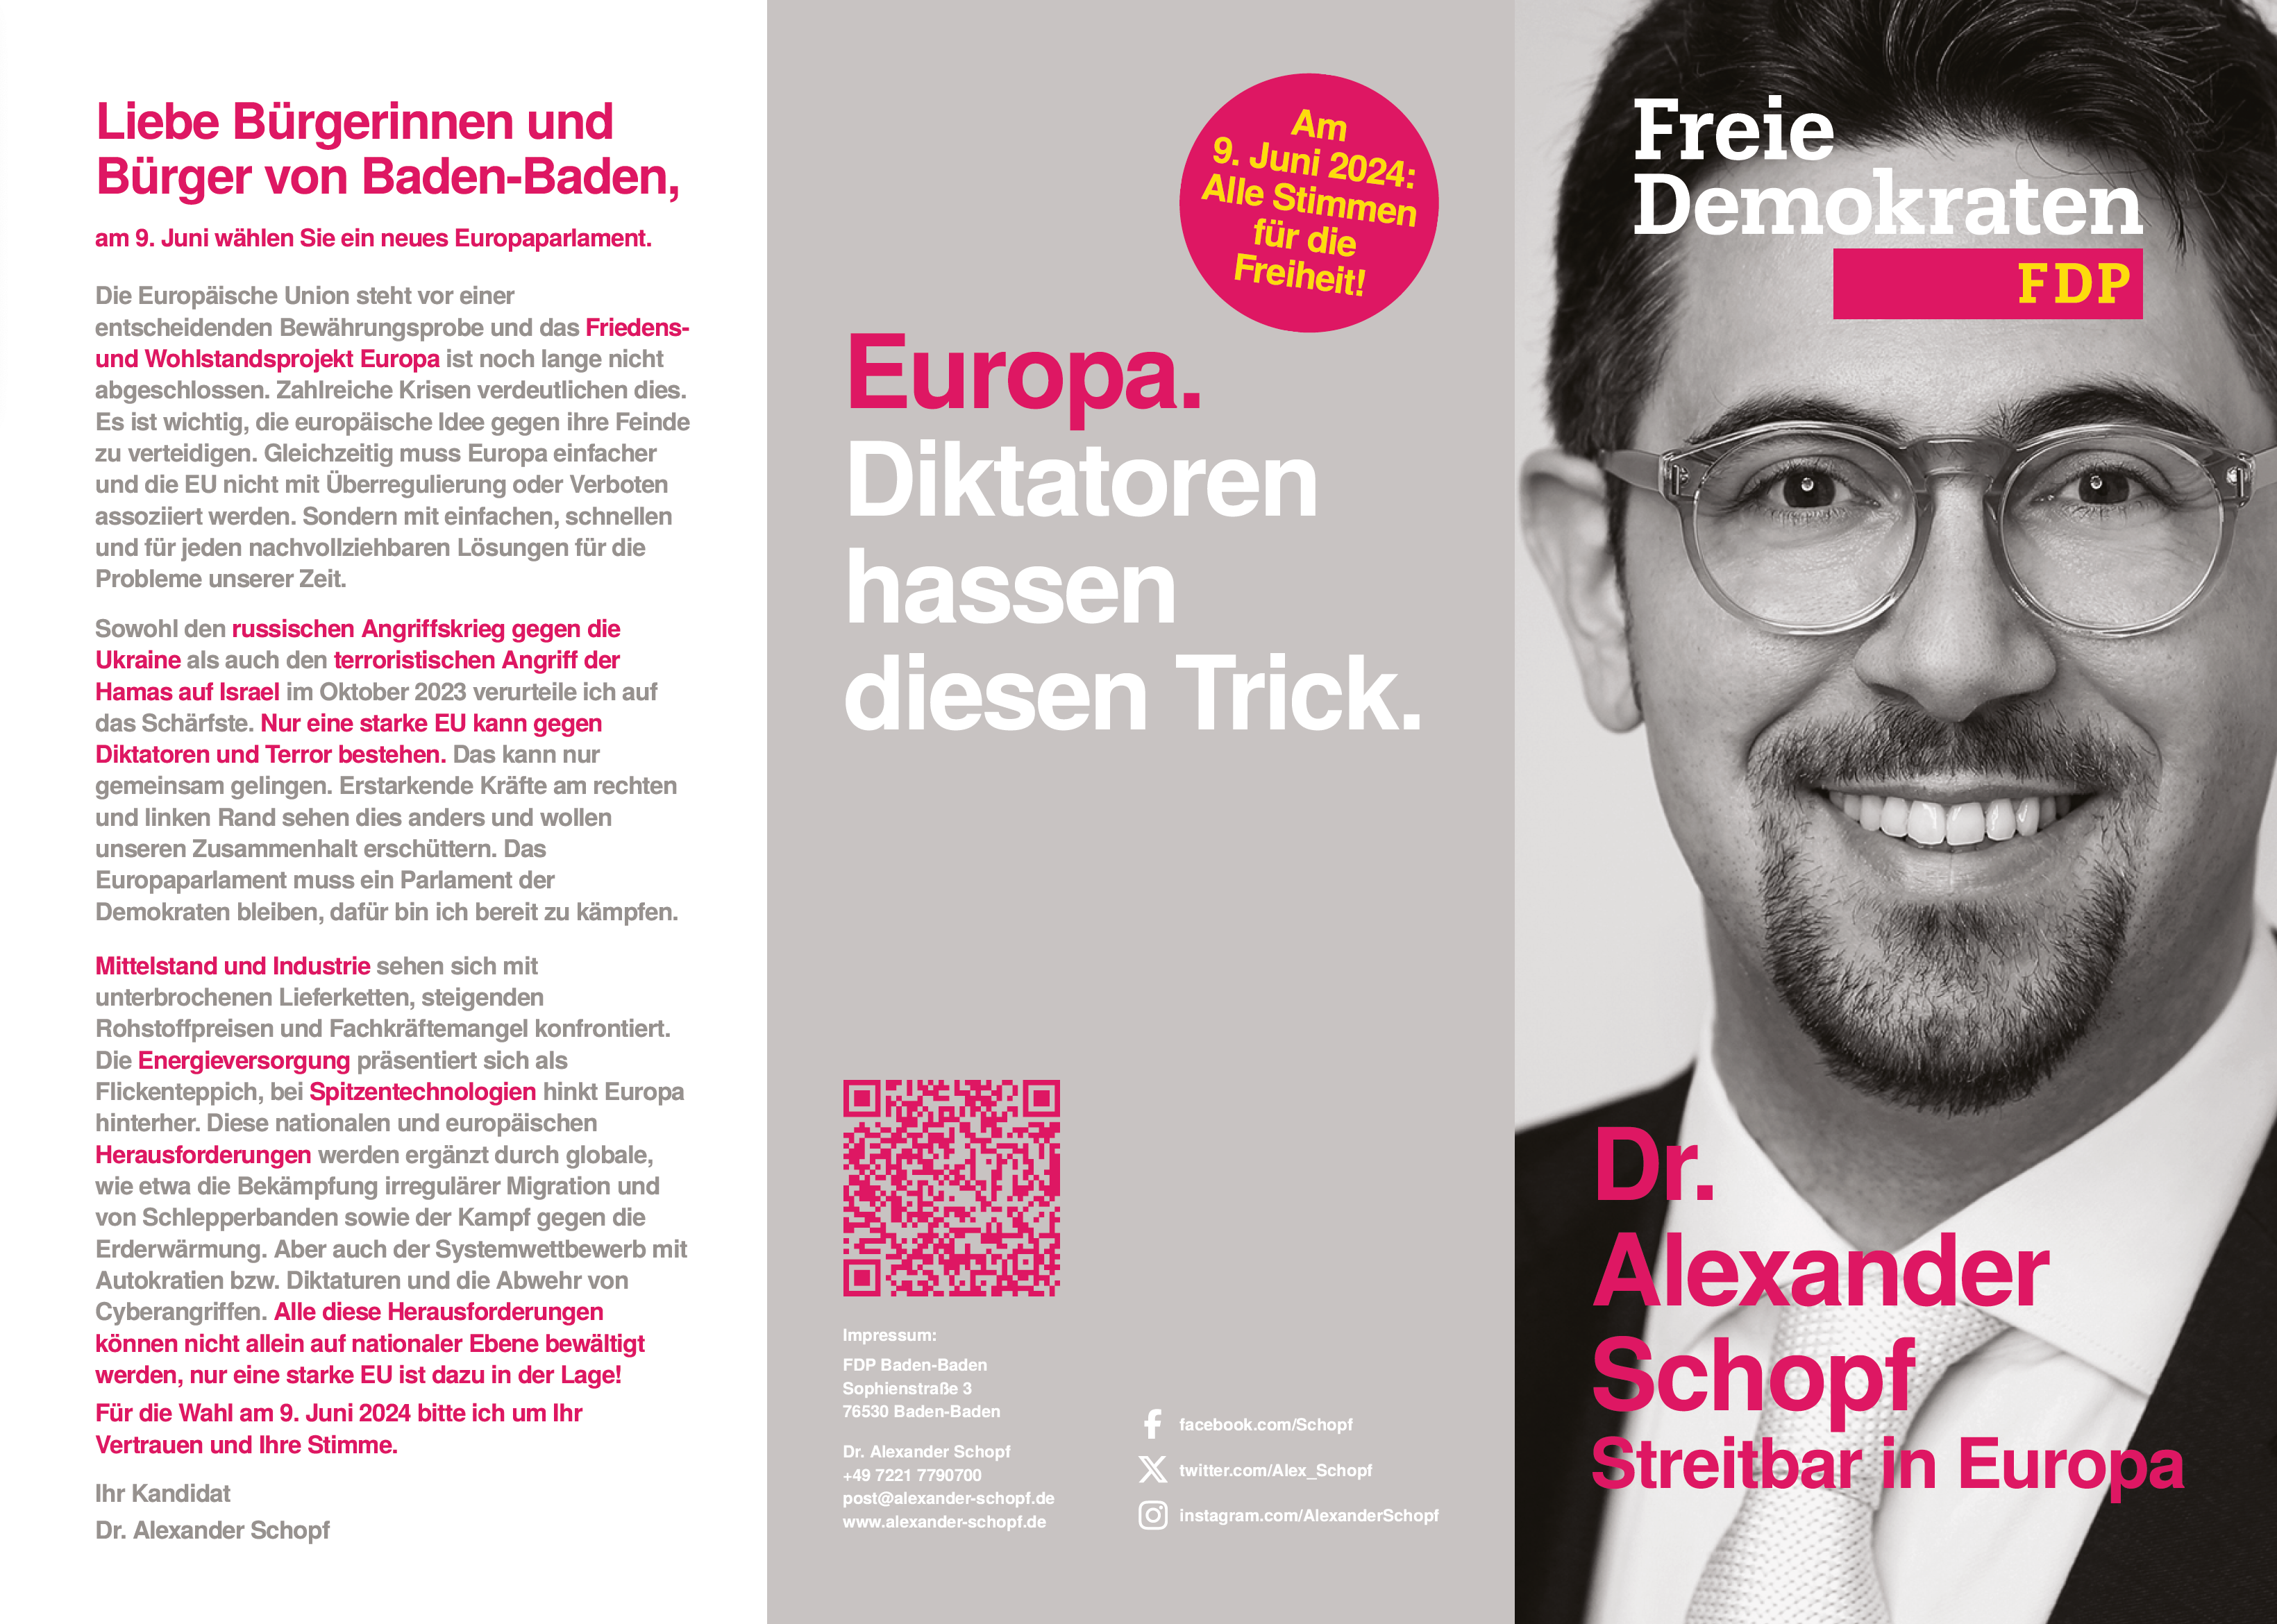 Dr. Alexander Schopf | Streitbar in Europa